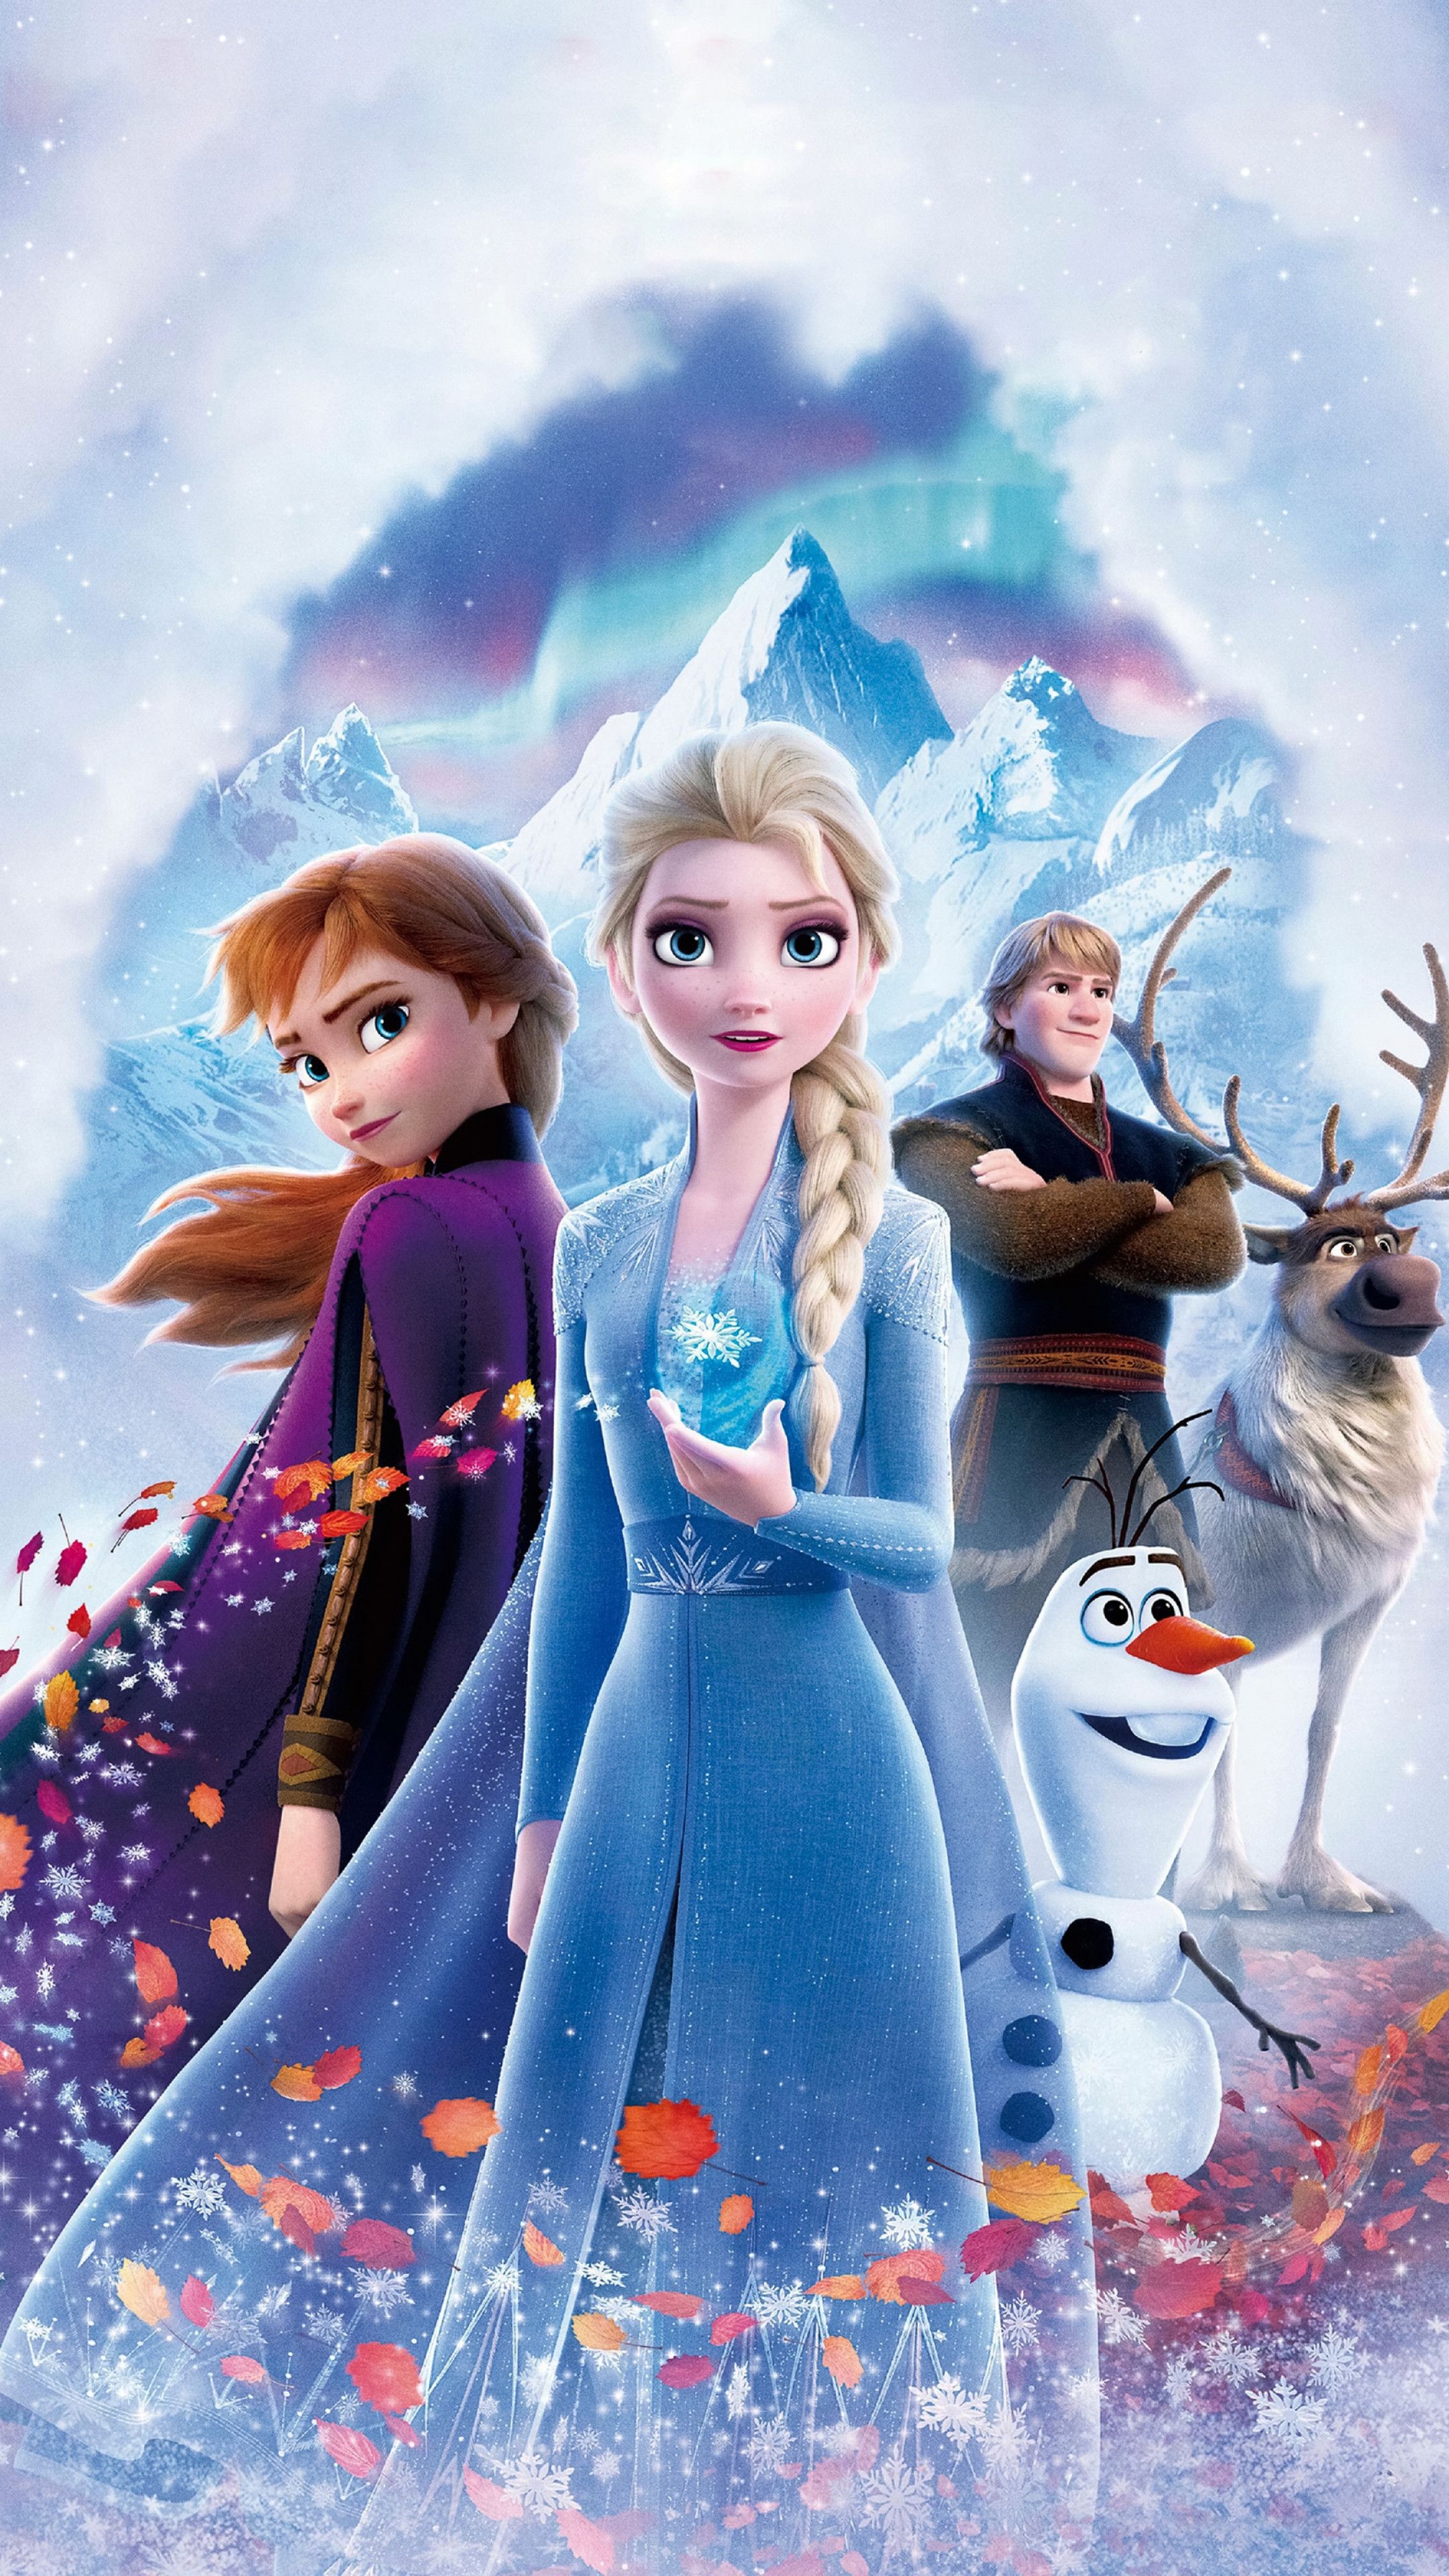 Disney Animation, Frozen 2 poster, 4K resolution, Disney princess, 2160x3840 4K Phone